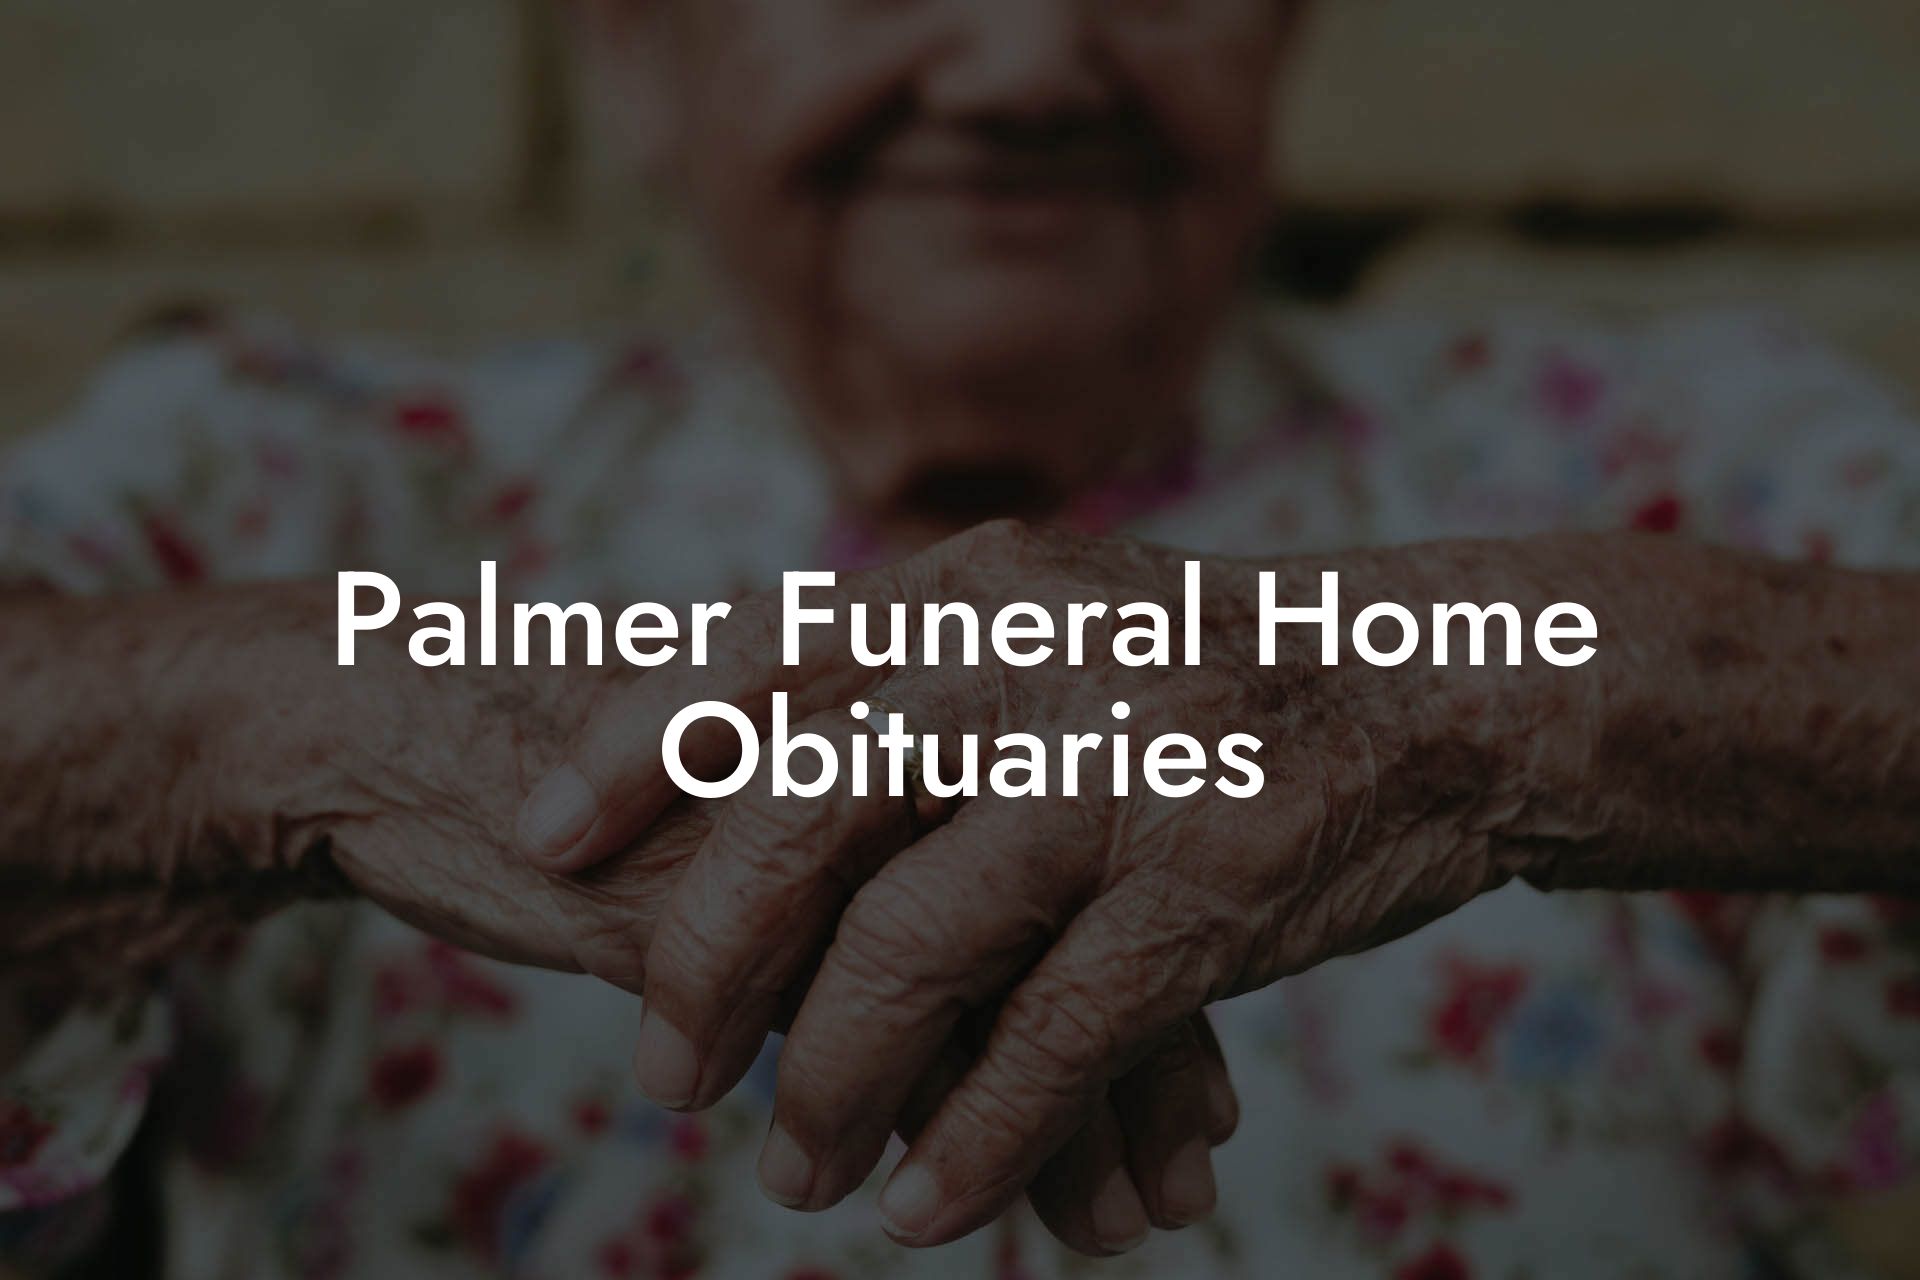 Palmer Funeral Home Obituaries